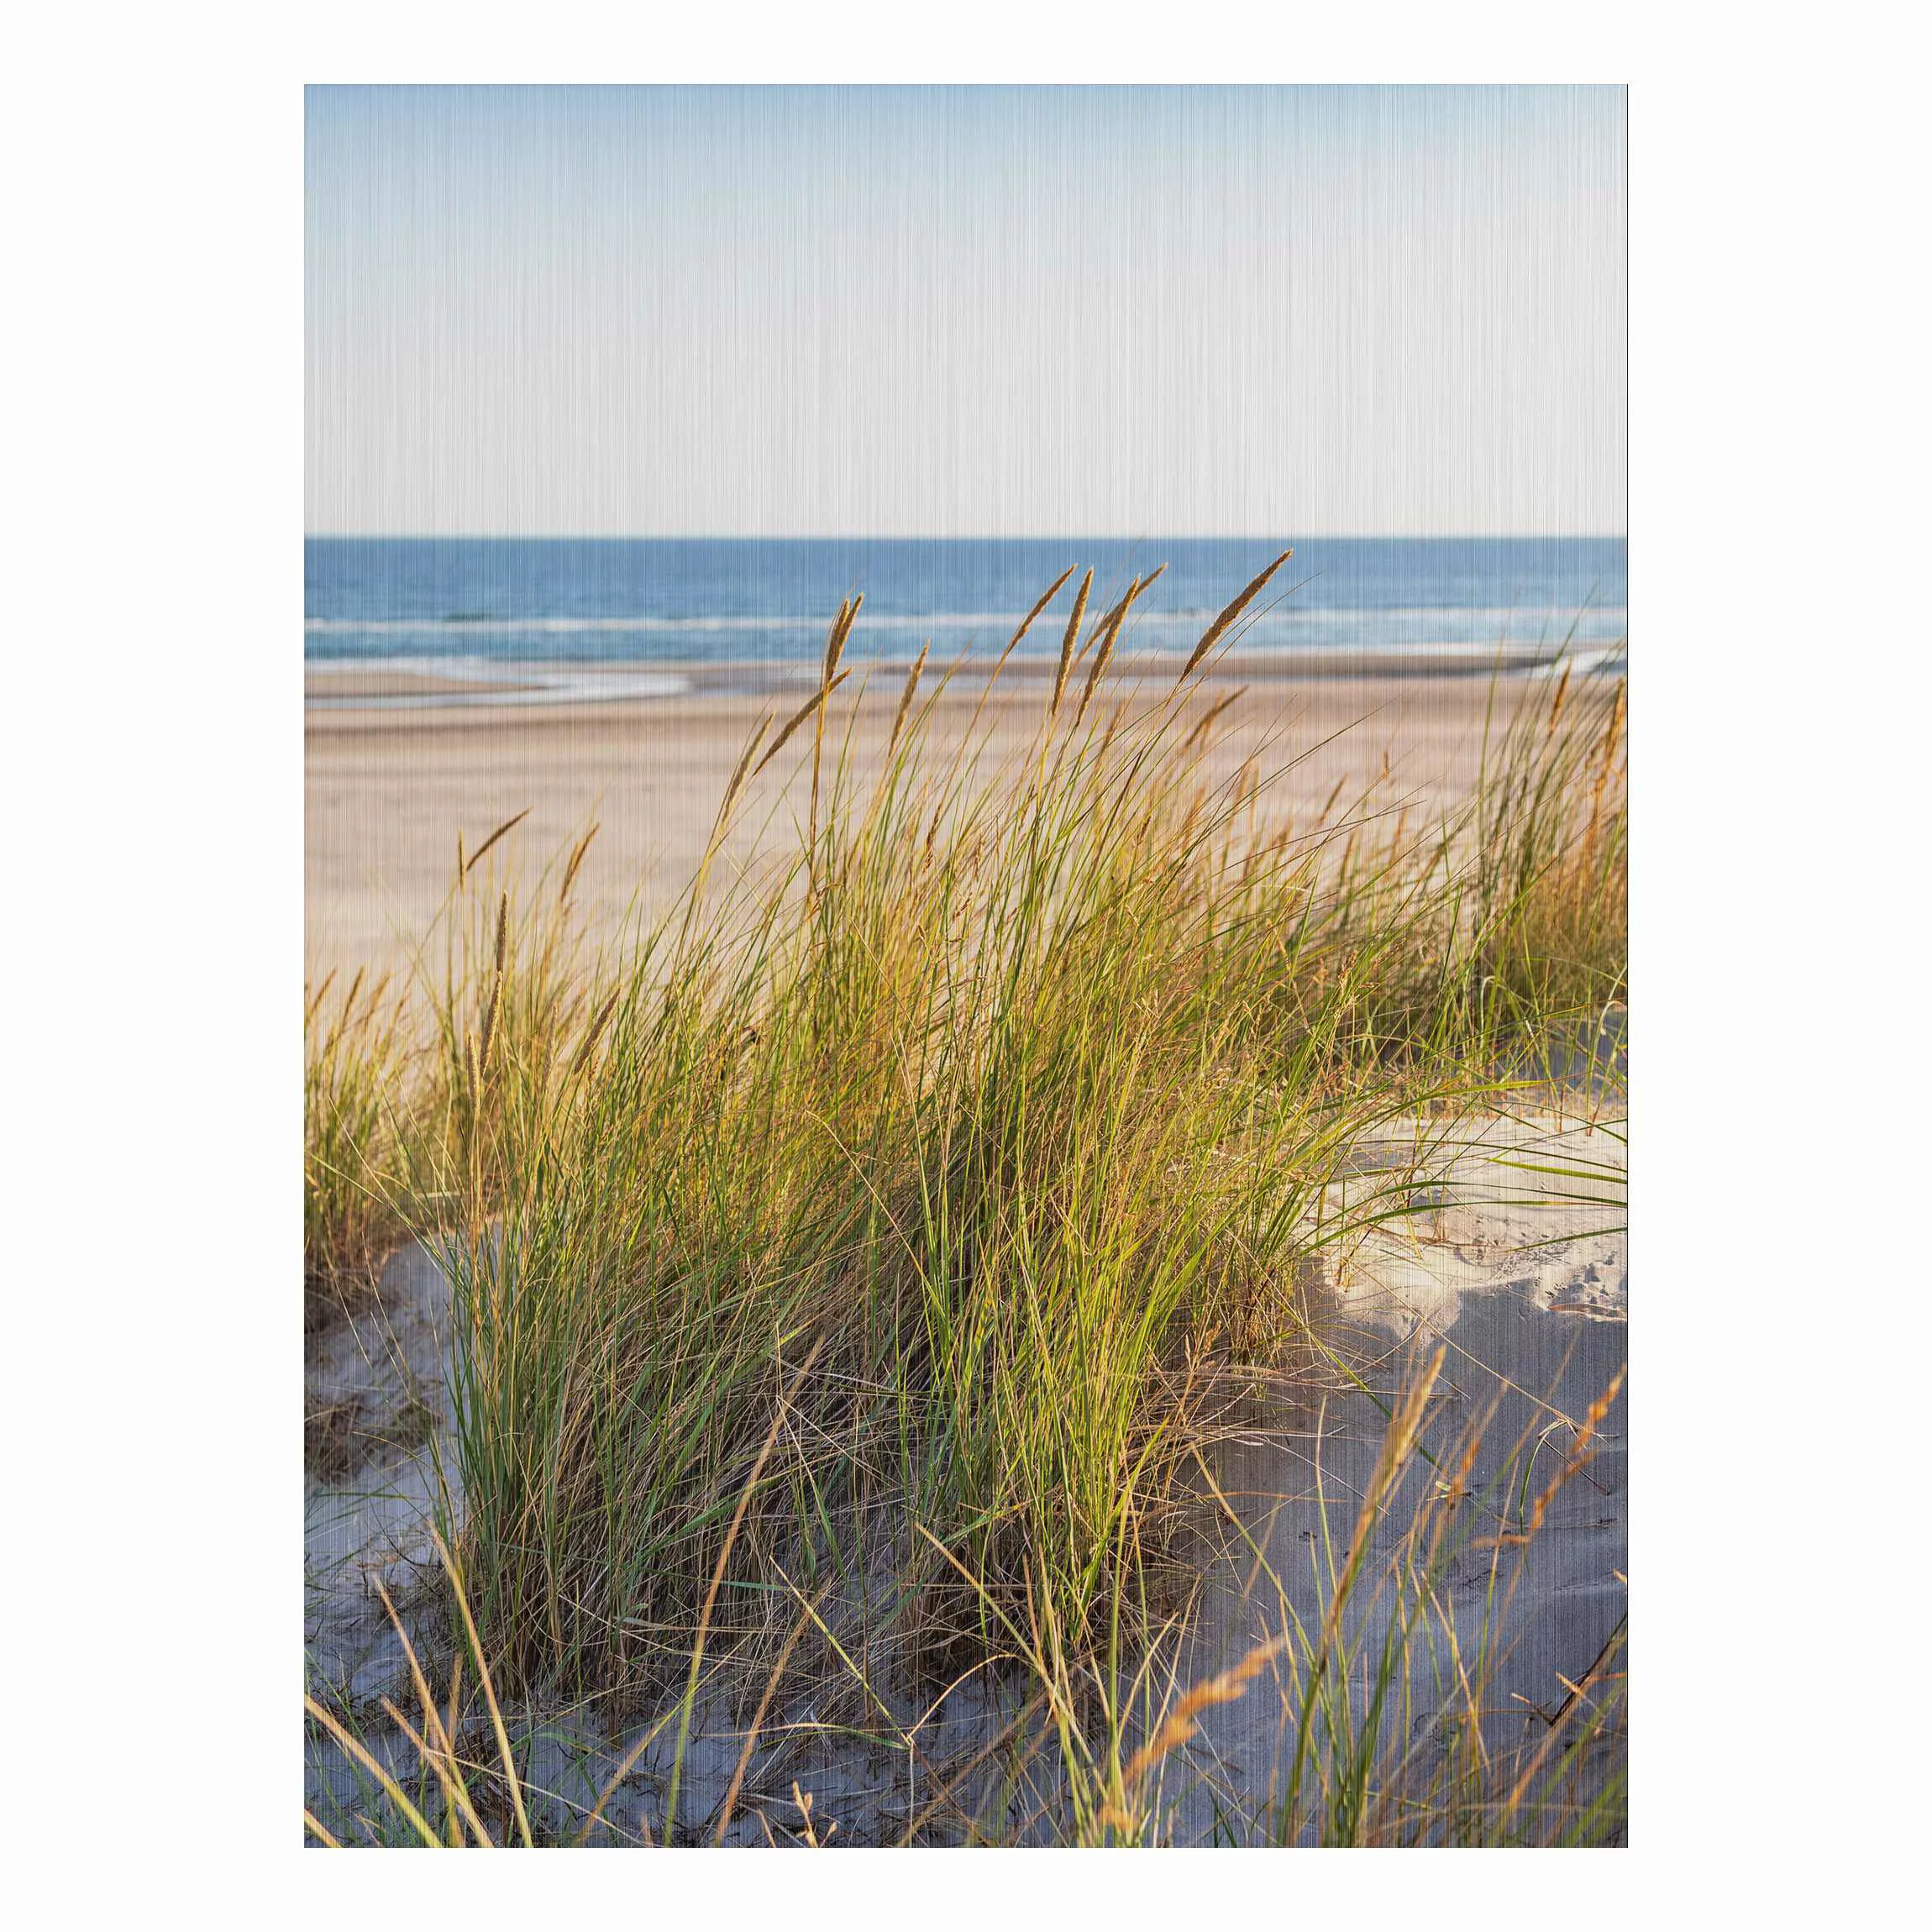 Alu-Dibond Bild Natur & Landschaft - Hochformat 3:4 Stranddüne am Meer günstig online kaufen